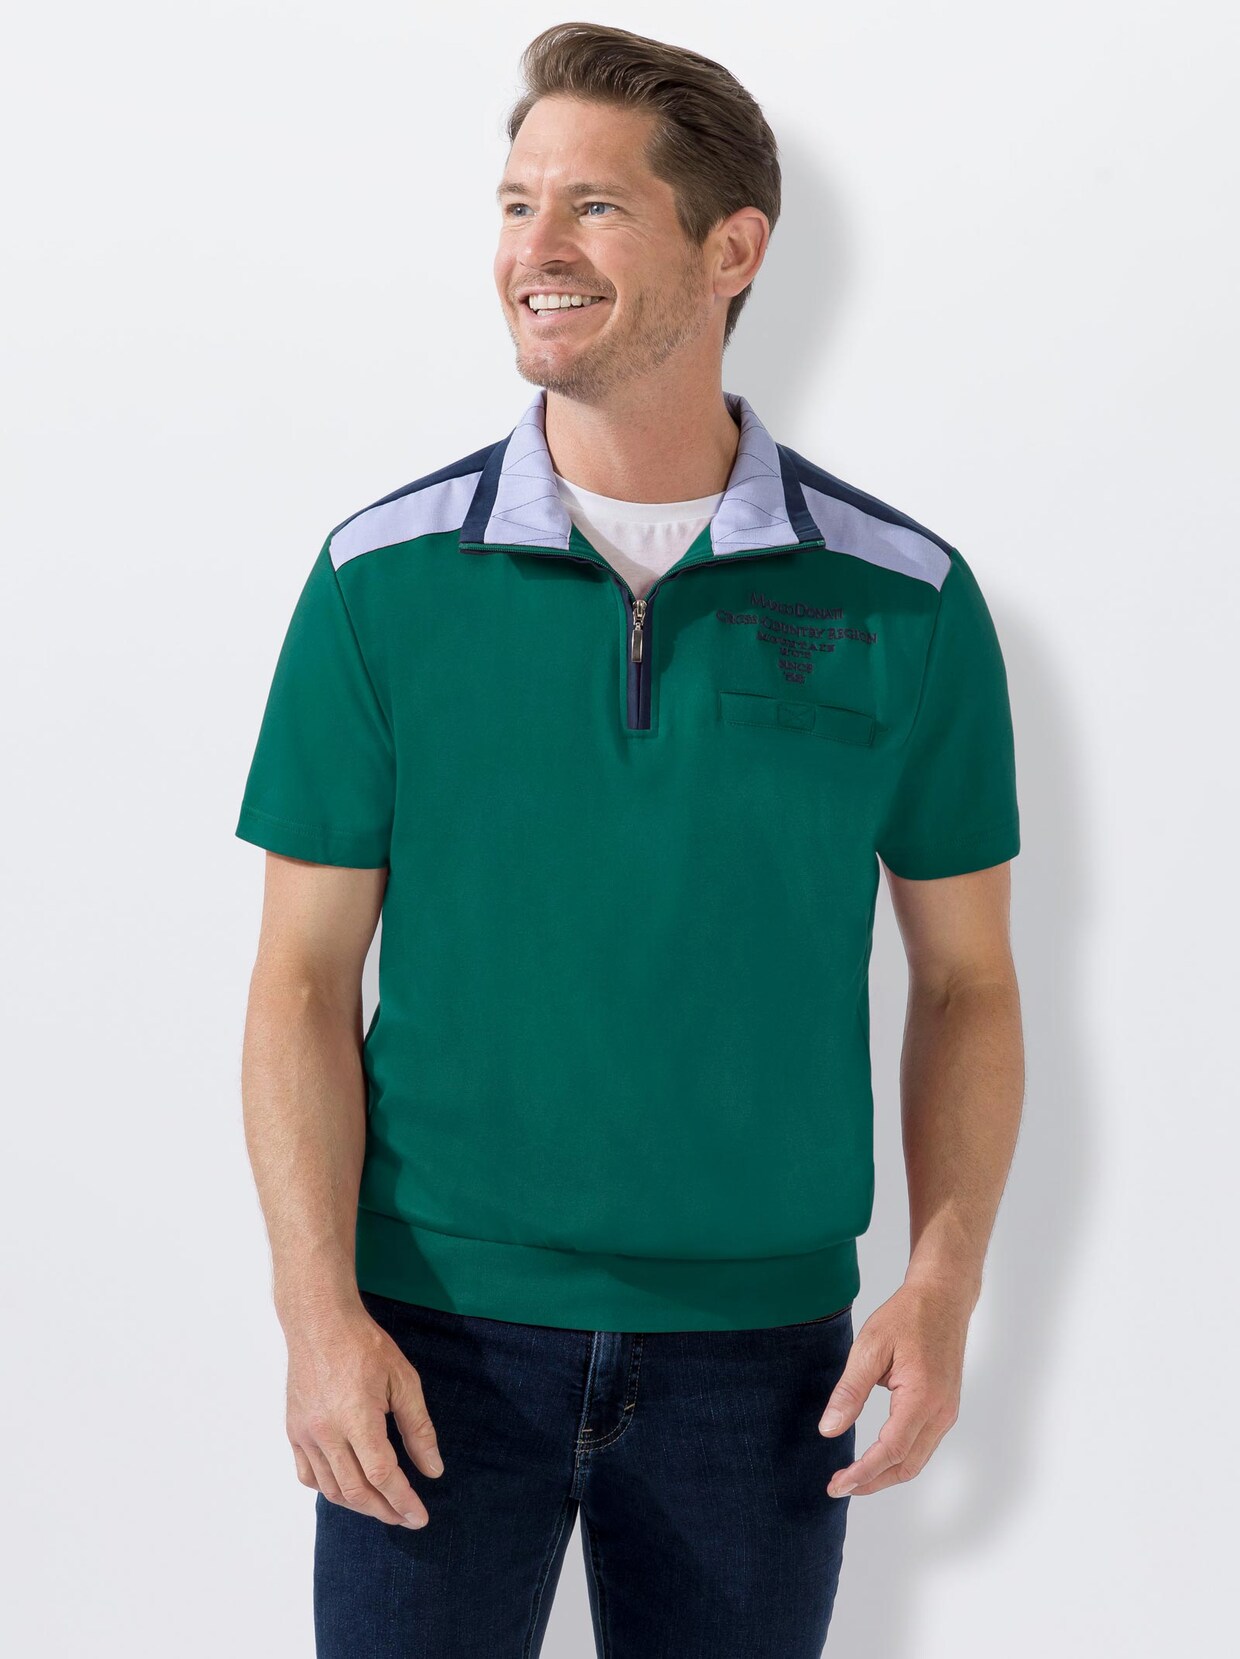 Marco Donati Kurzarm-Shirt - grün